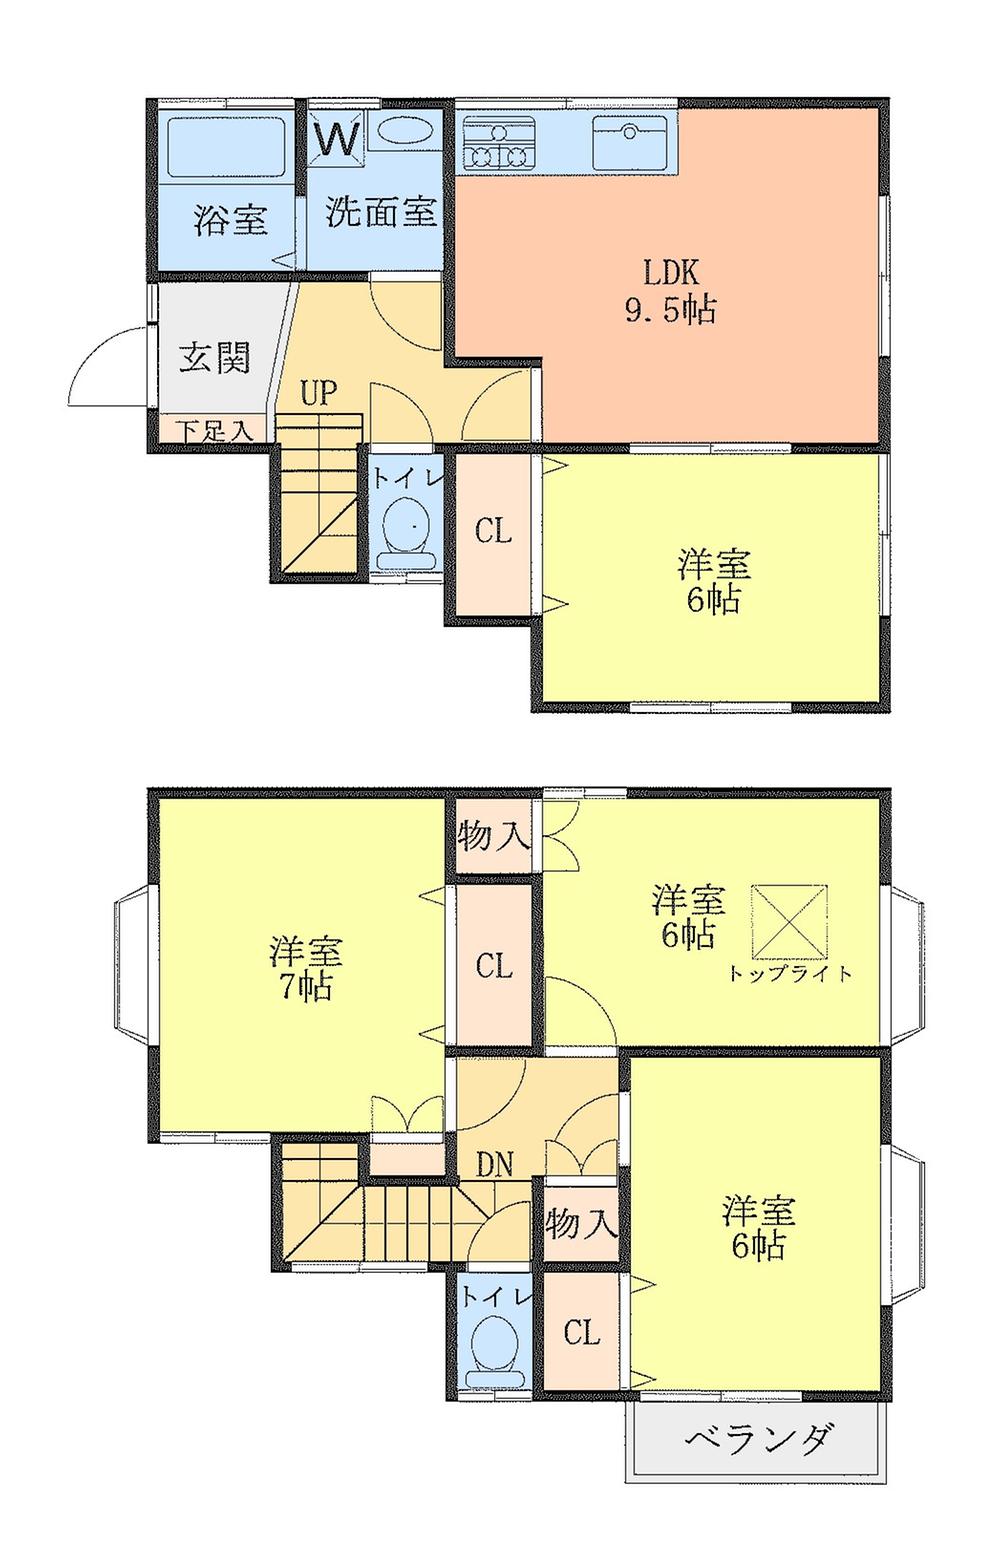 Floor plan. 26,800,000 yen, 4LDK, Land area 103.5 sq m , Building area 83.27 sq m